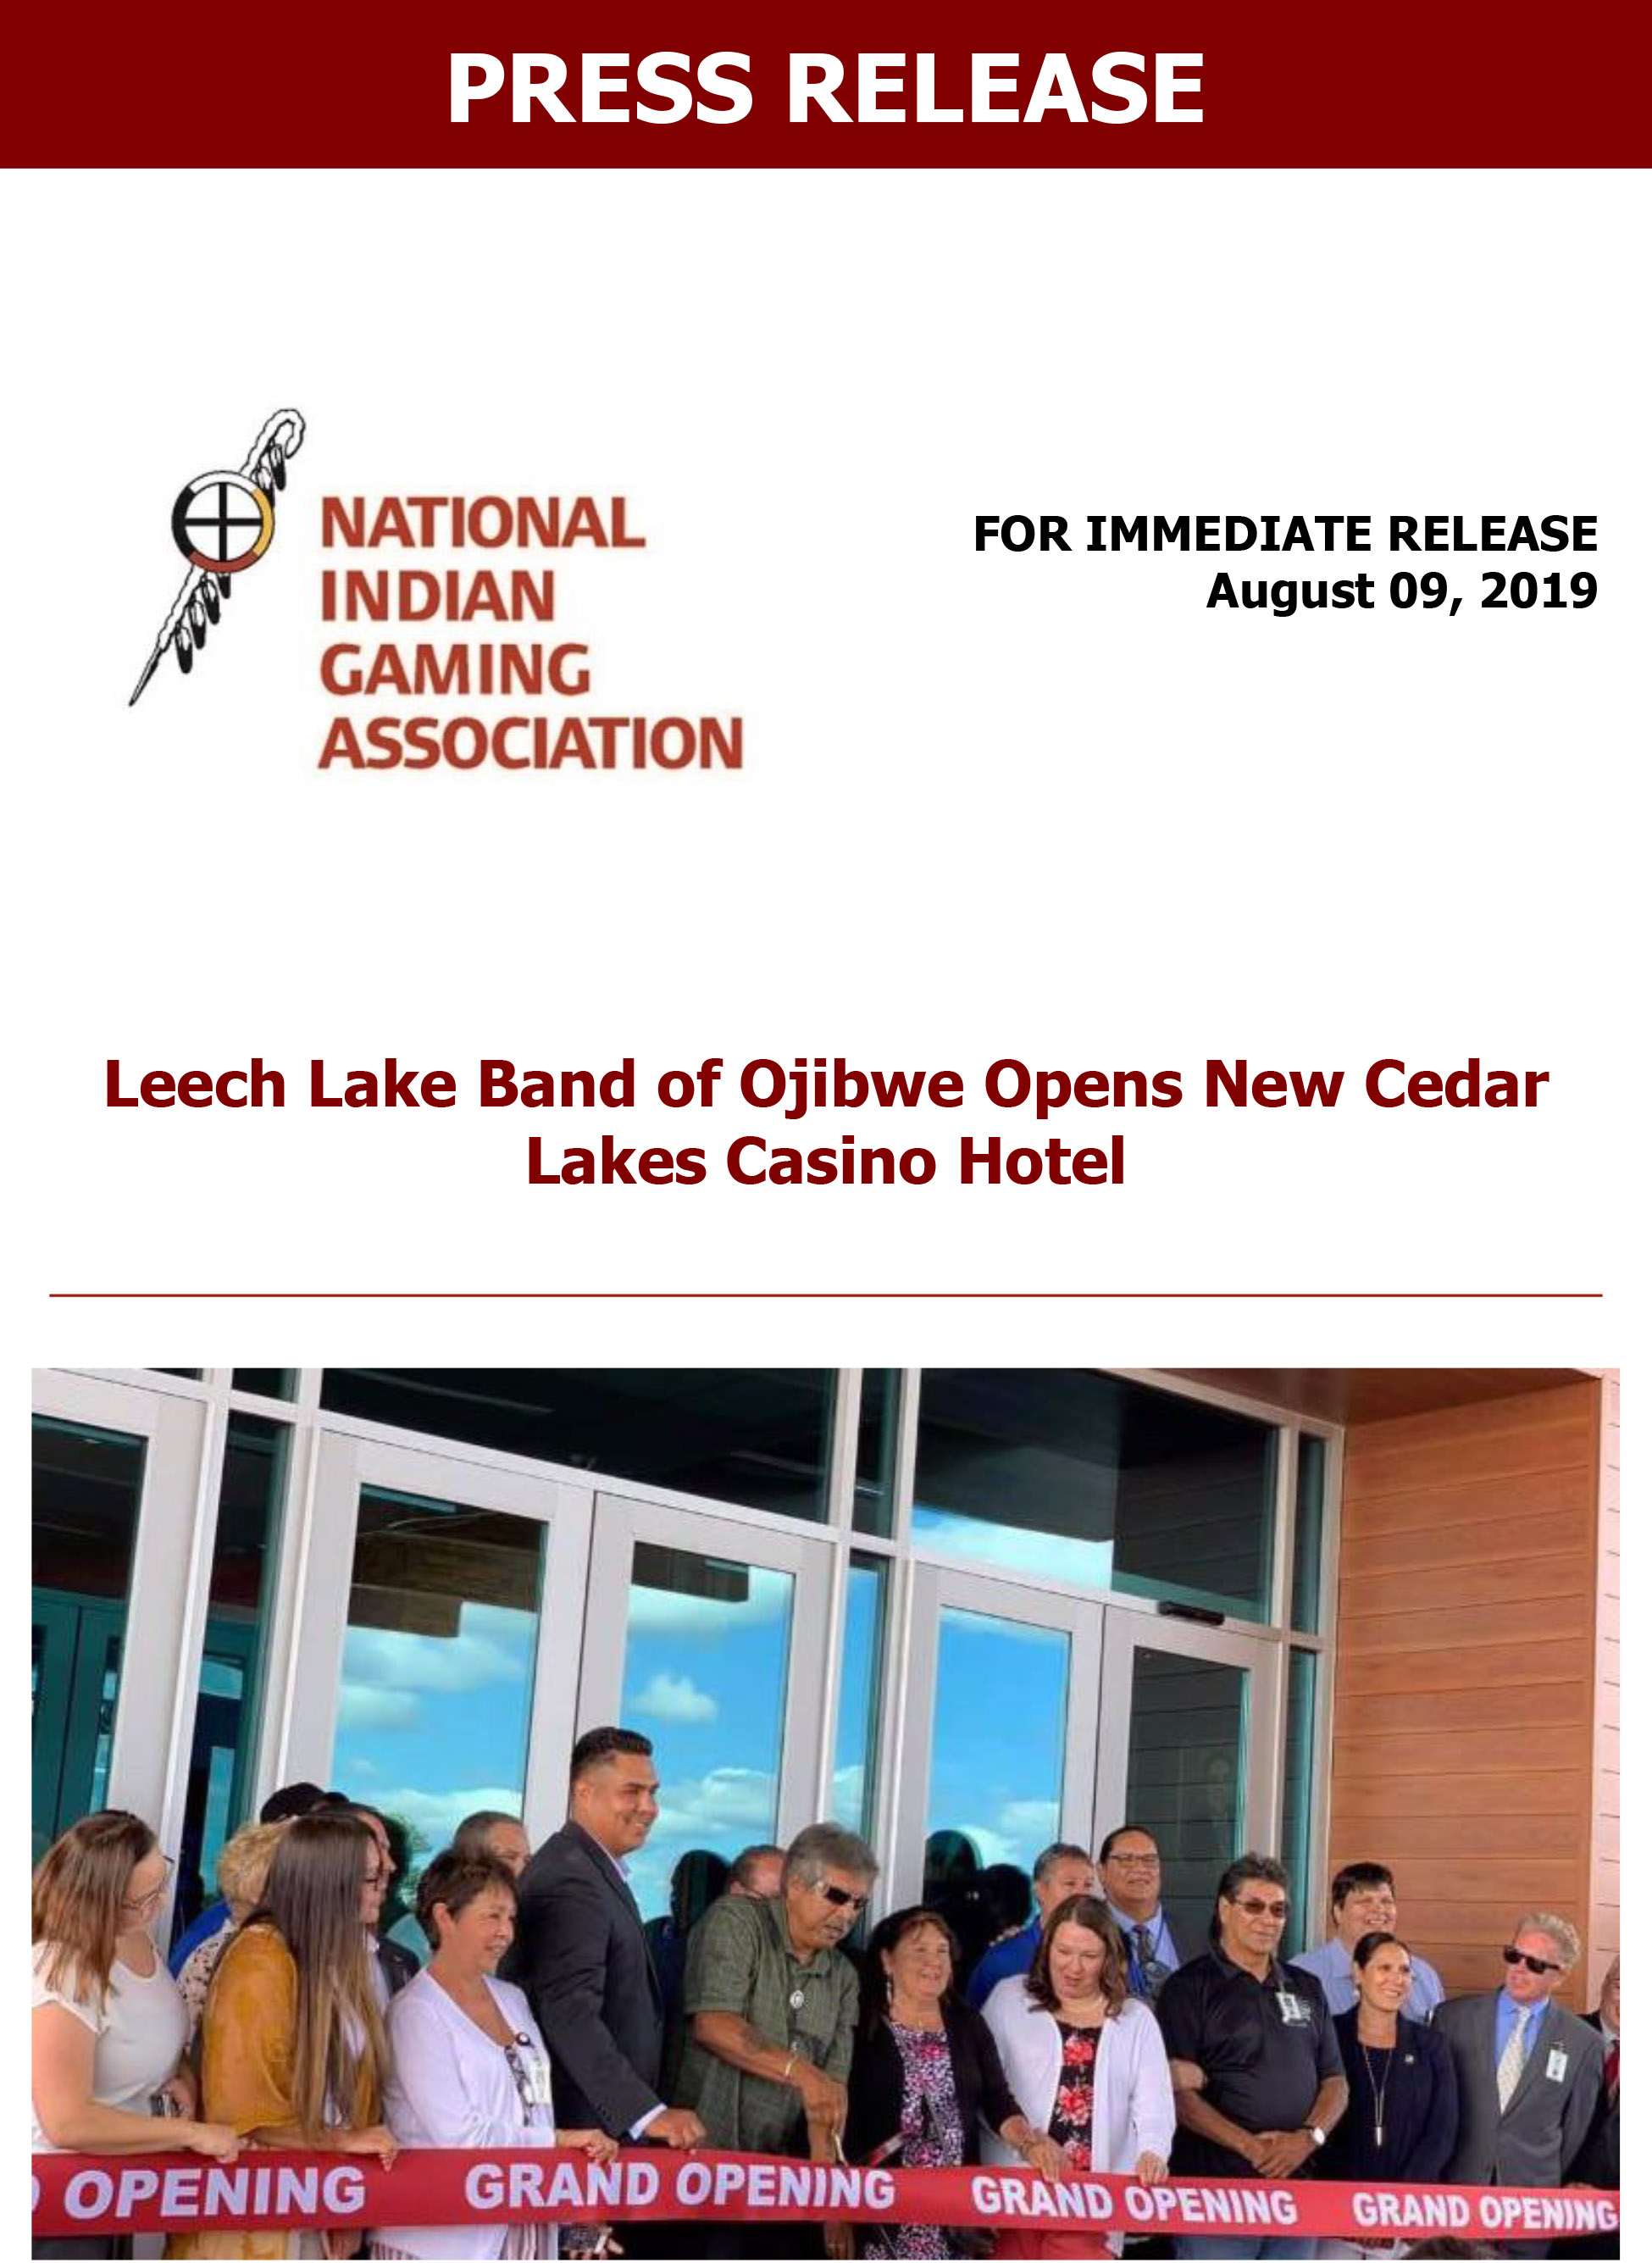 Leech Lake Band of Ojibwe Opens New Cedar Lakes Casino Hotel